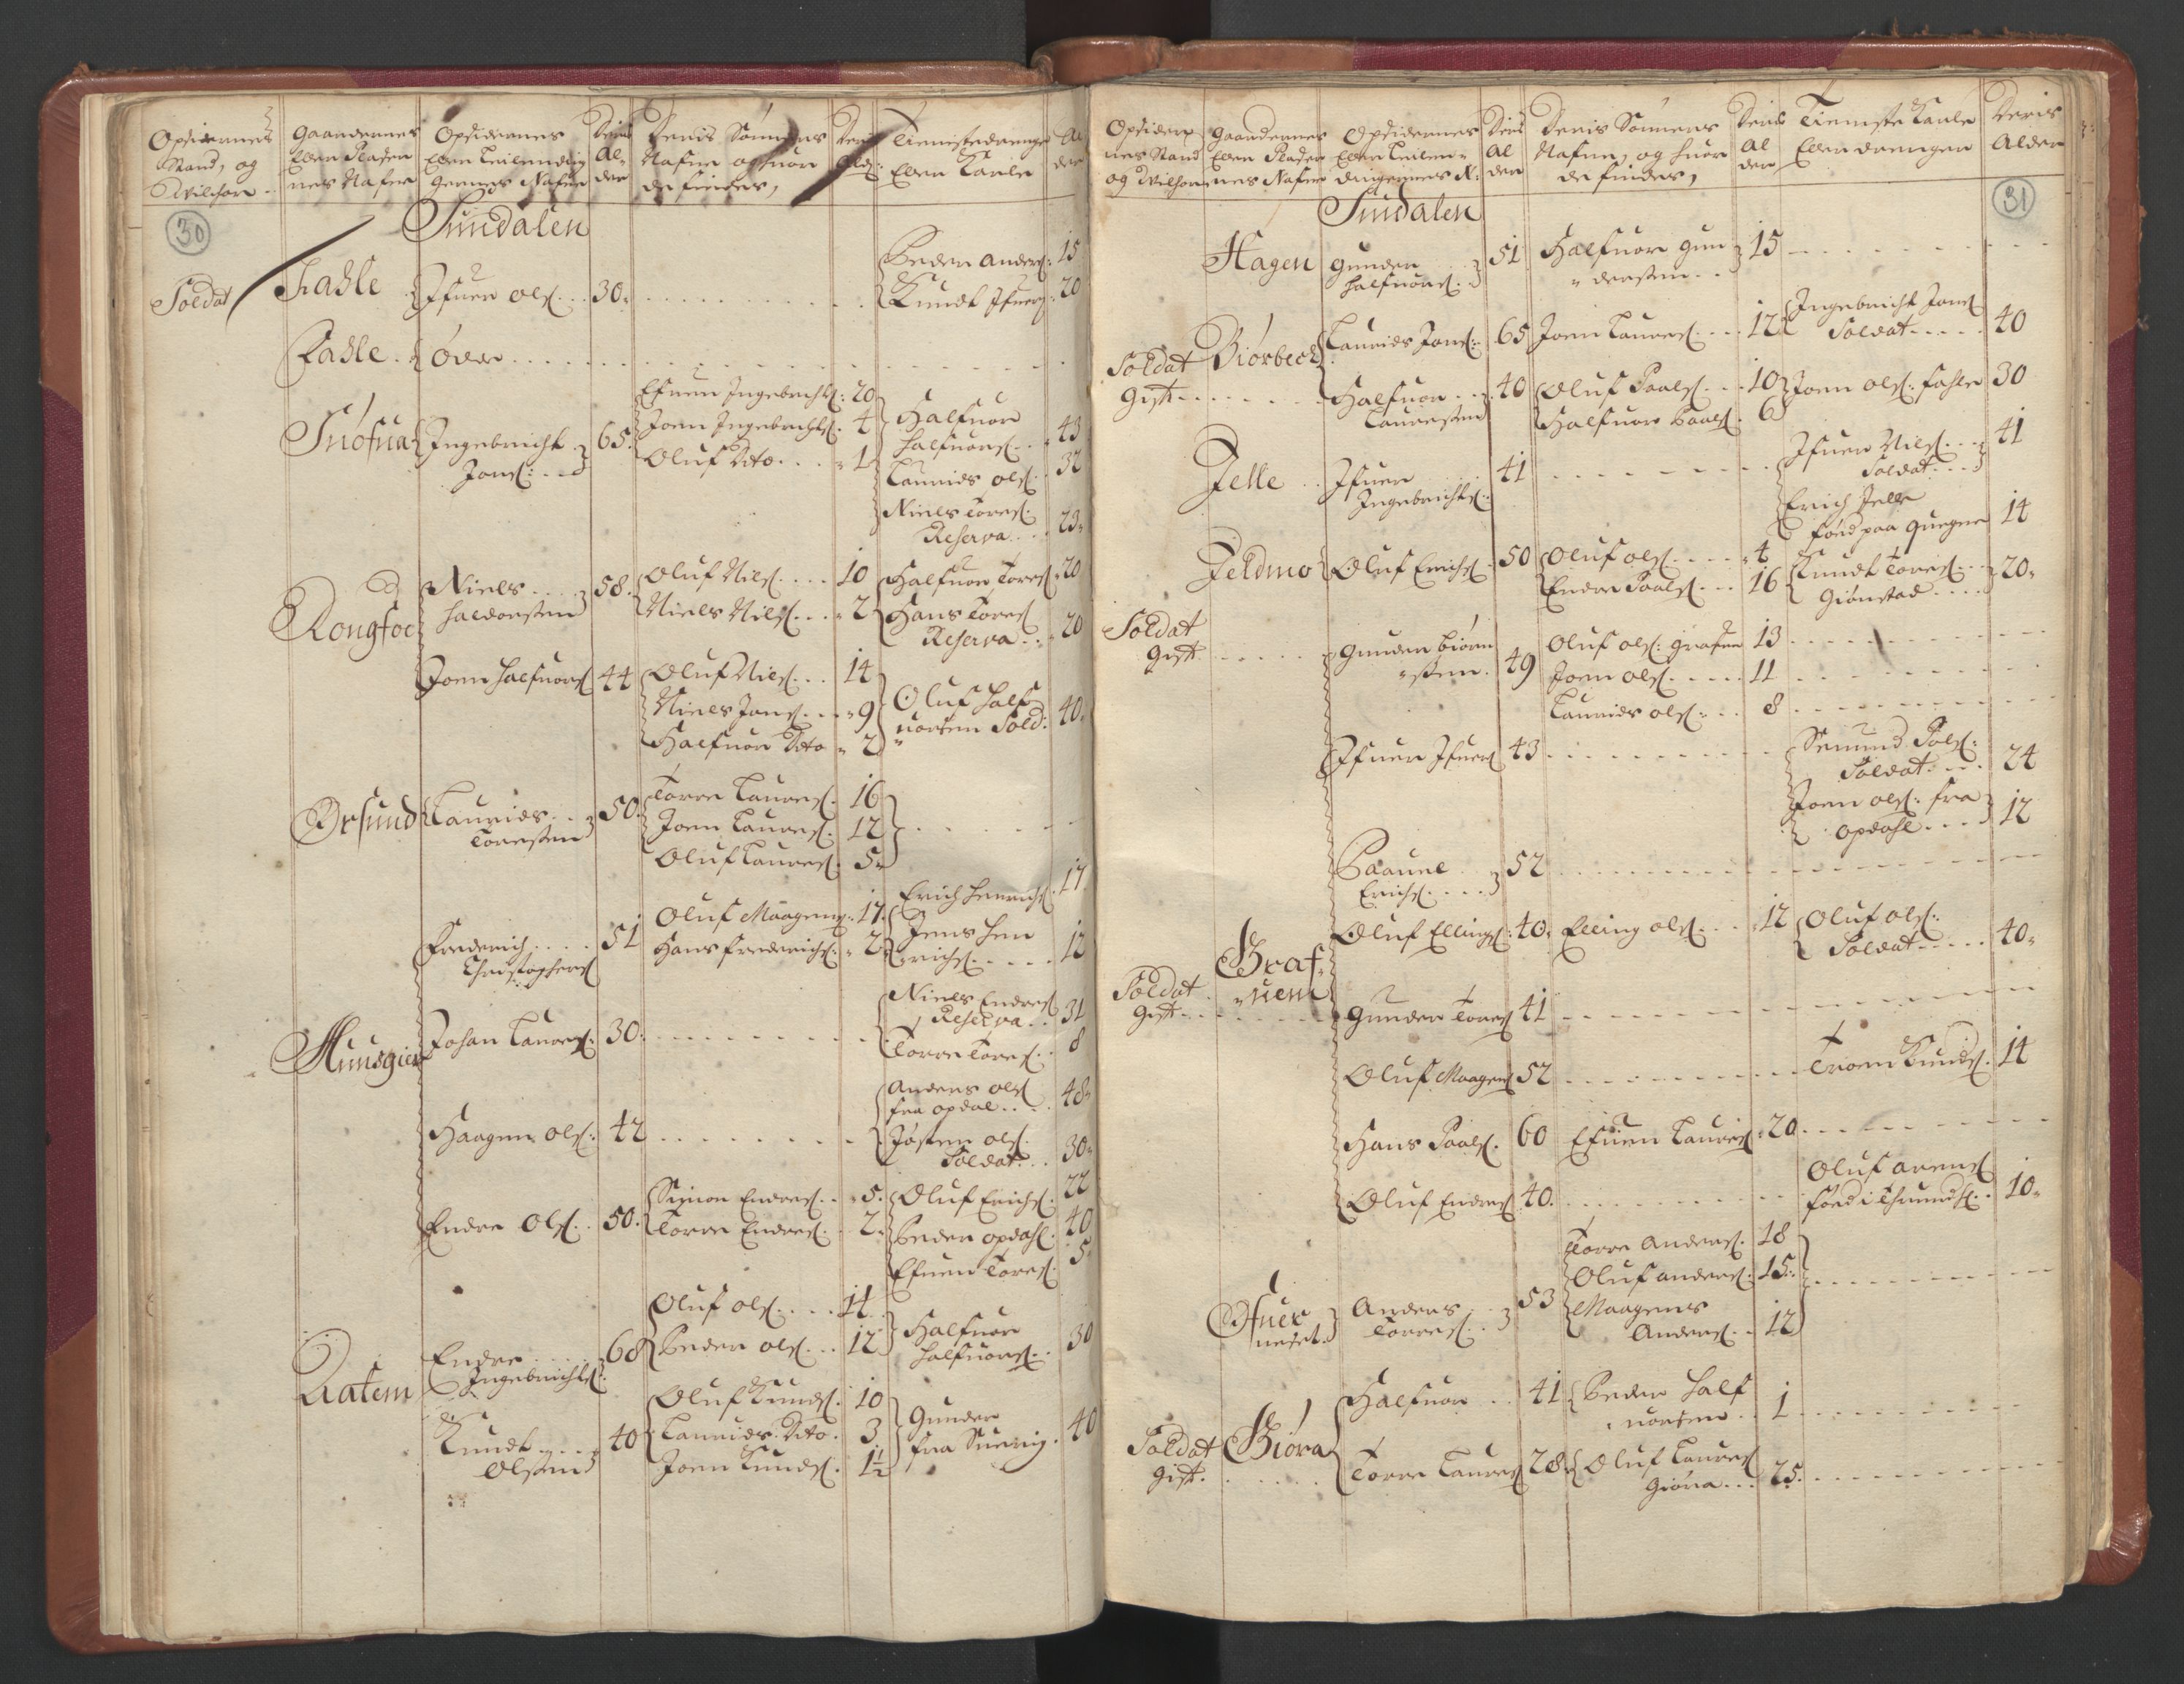 RA, Manntallet 1701, nr. 11: Nordmøre fogderi og Romsdal fogderi, 1701, s. 30-31